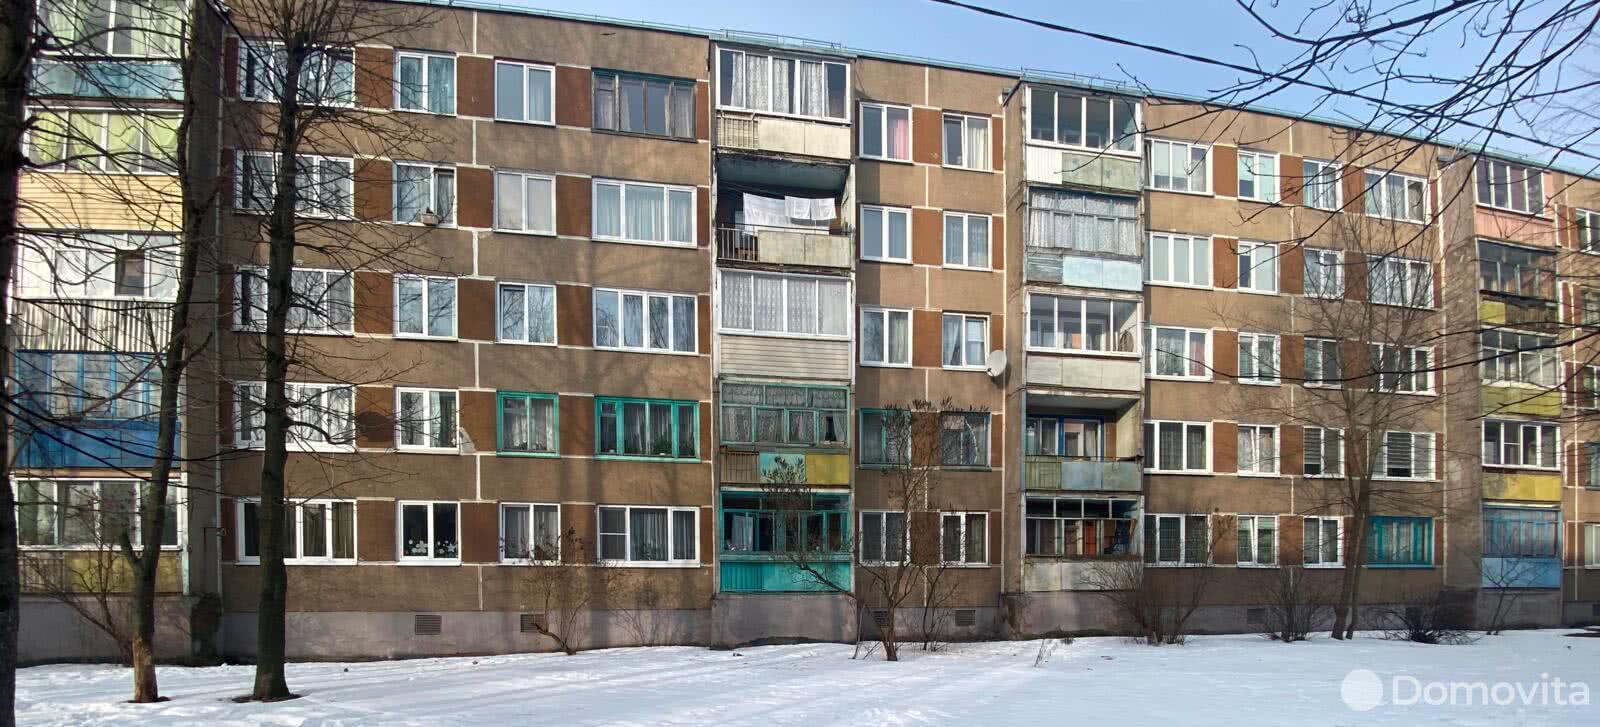 продажа квартиры, Могилев, ул. Крупской, д. 188